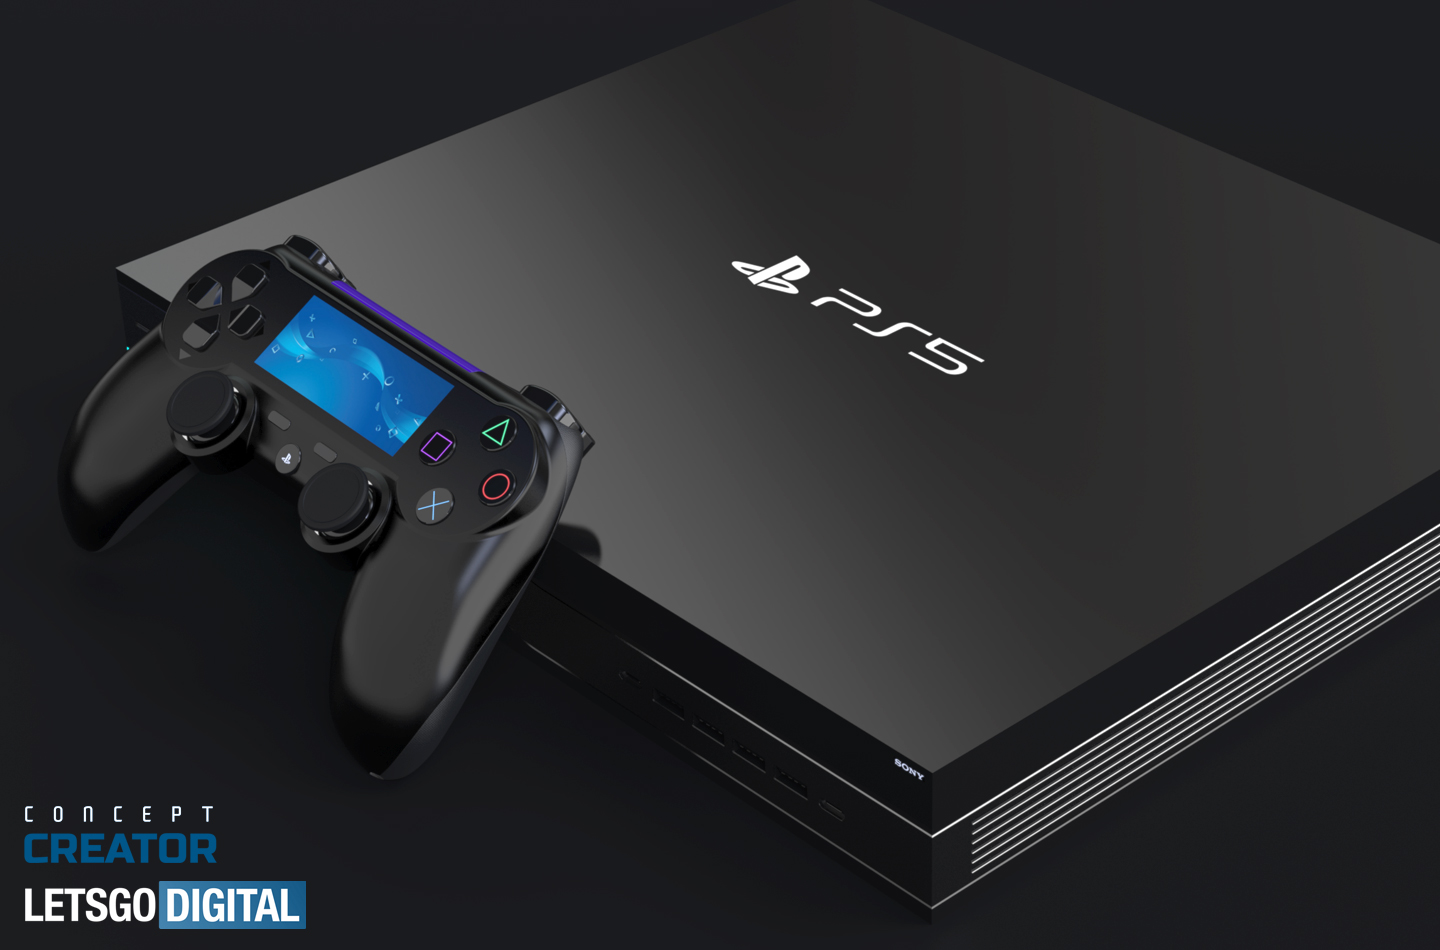 Sony confirms PlayStation 5 price: $399 digital, $499 standard